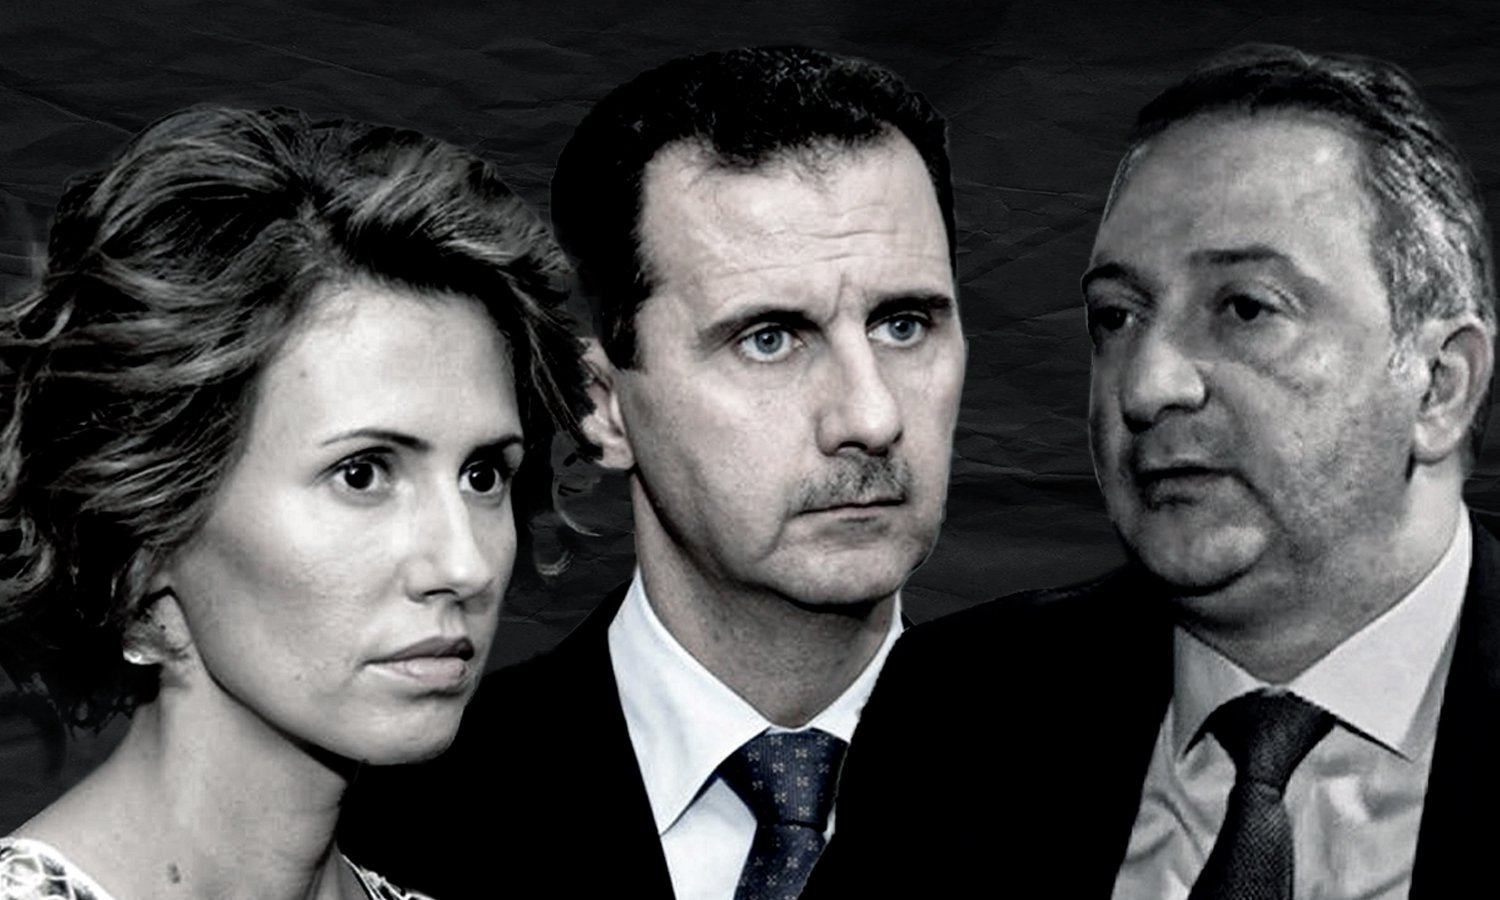 Syria's Central Bank Governor Hazem Karfoul, Asma al-Assad, and Bashar al-Assad - 24 December 2020 (edited by Enab Baladi)